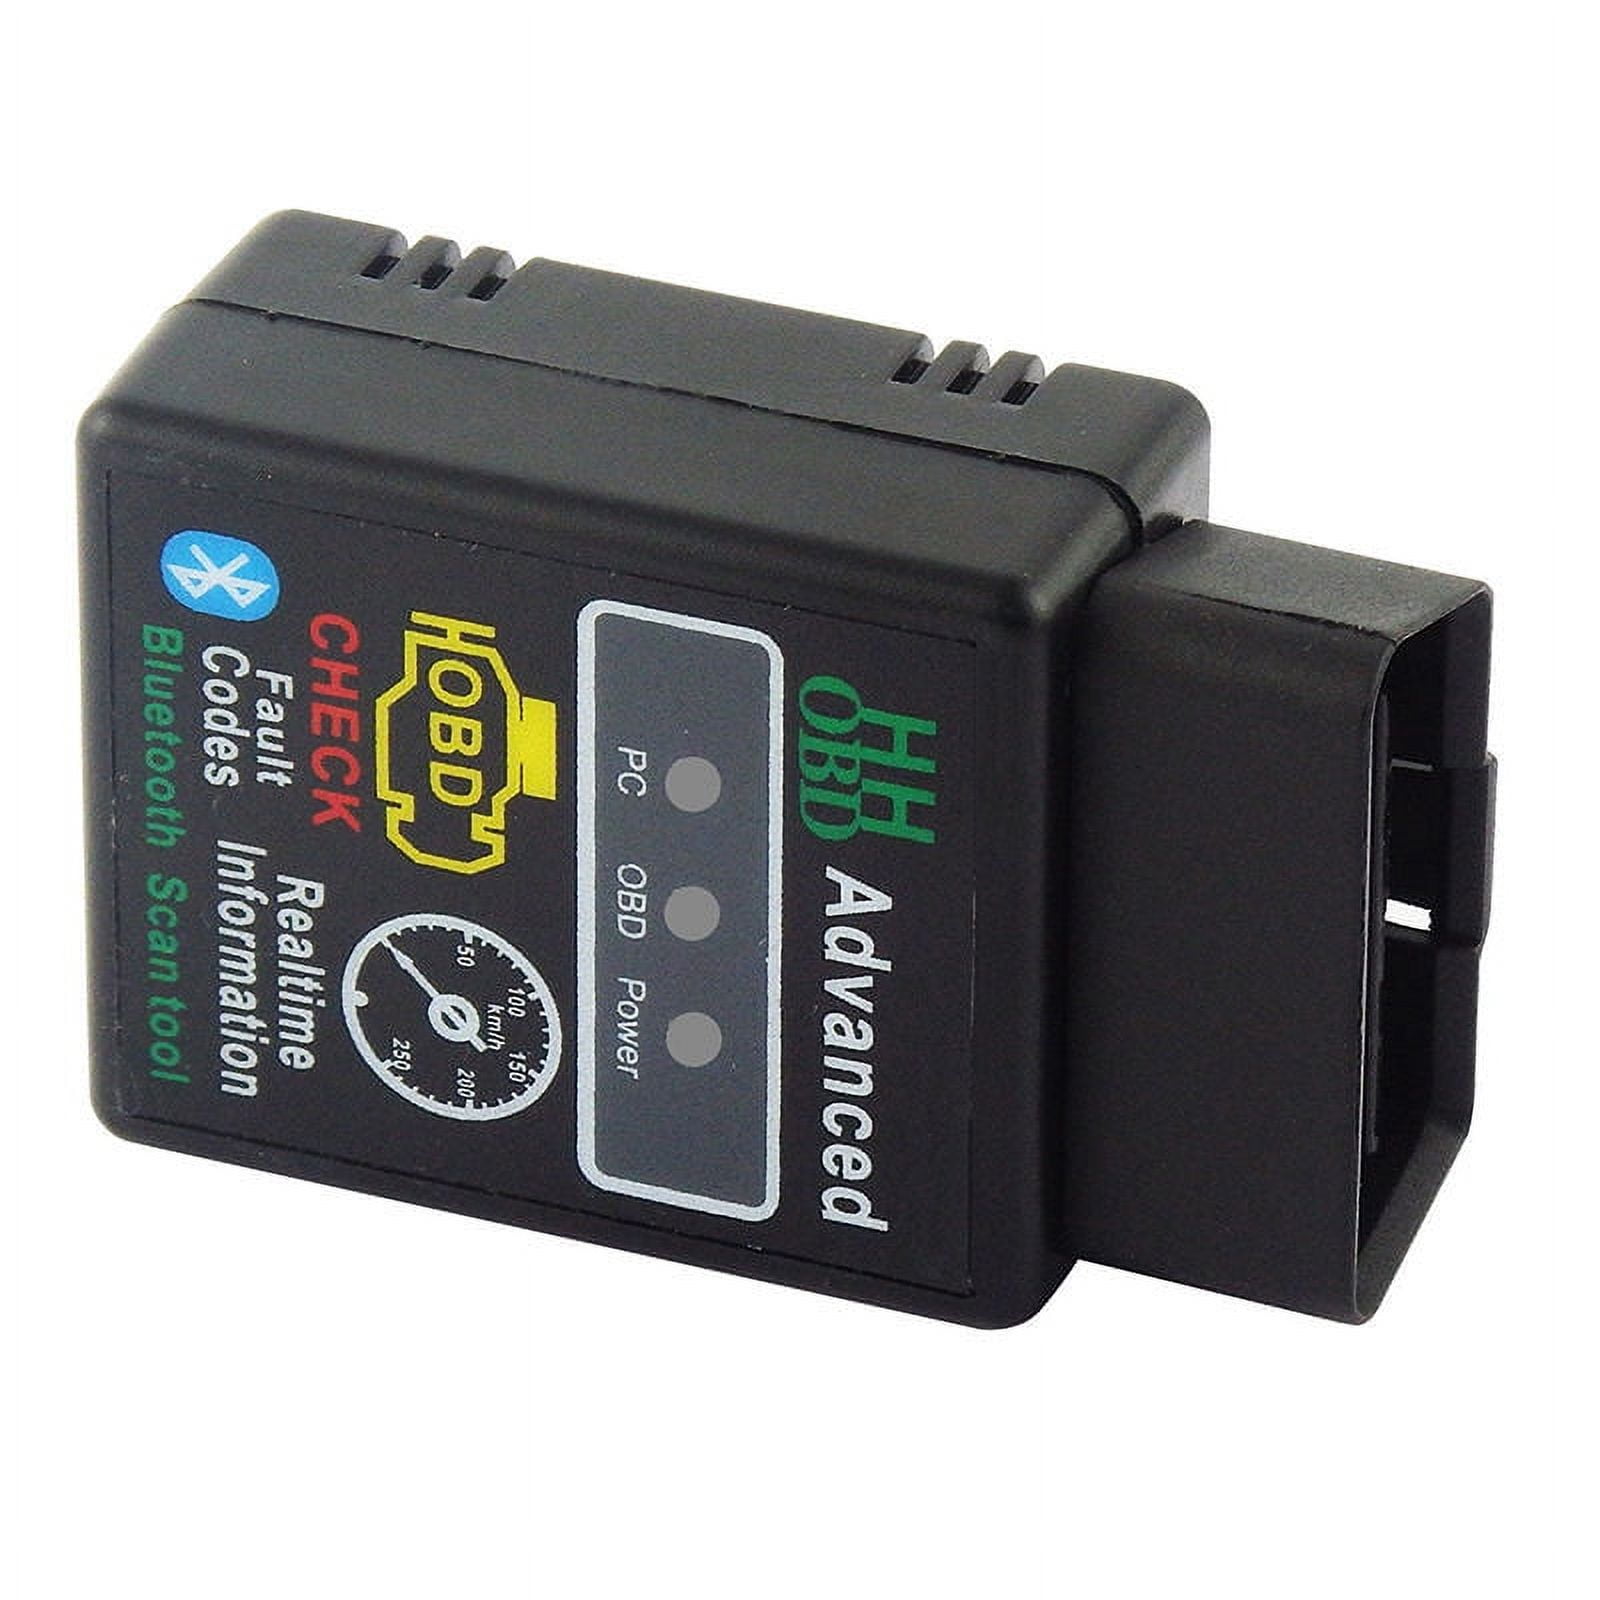 Buy Auto Scanner mini ELM327 Bluetooth OBD2 V2.1 Adapter Car Diagnostic  Tool for Junsun DVD Online